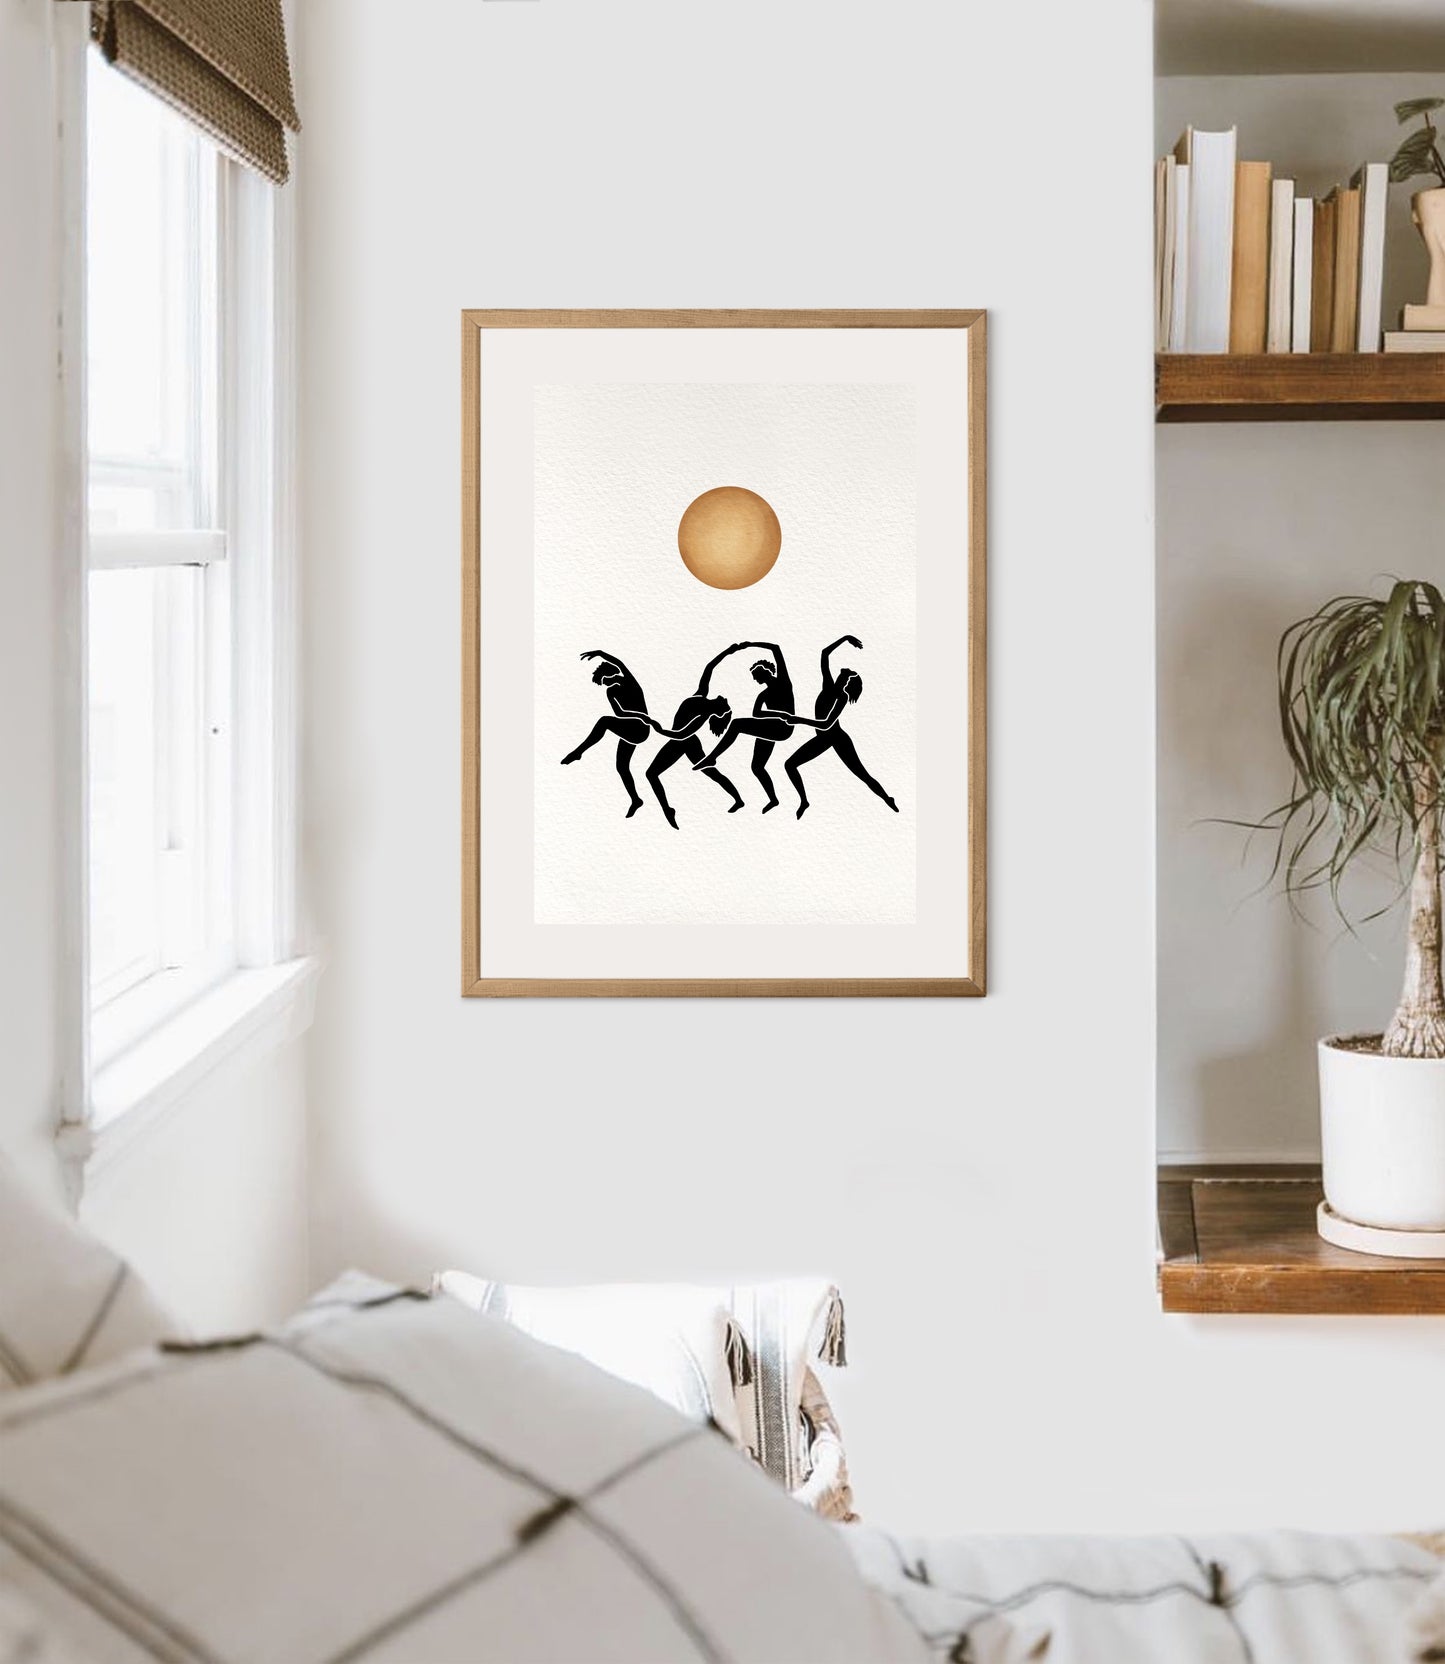 Sun Dancers - Art print - A4